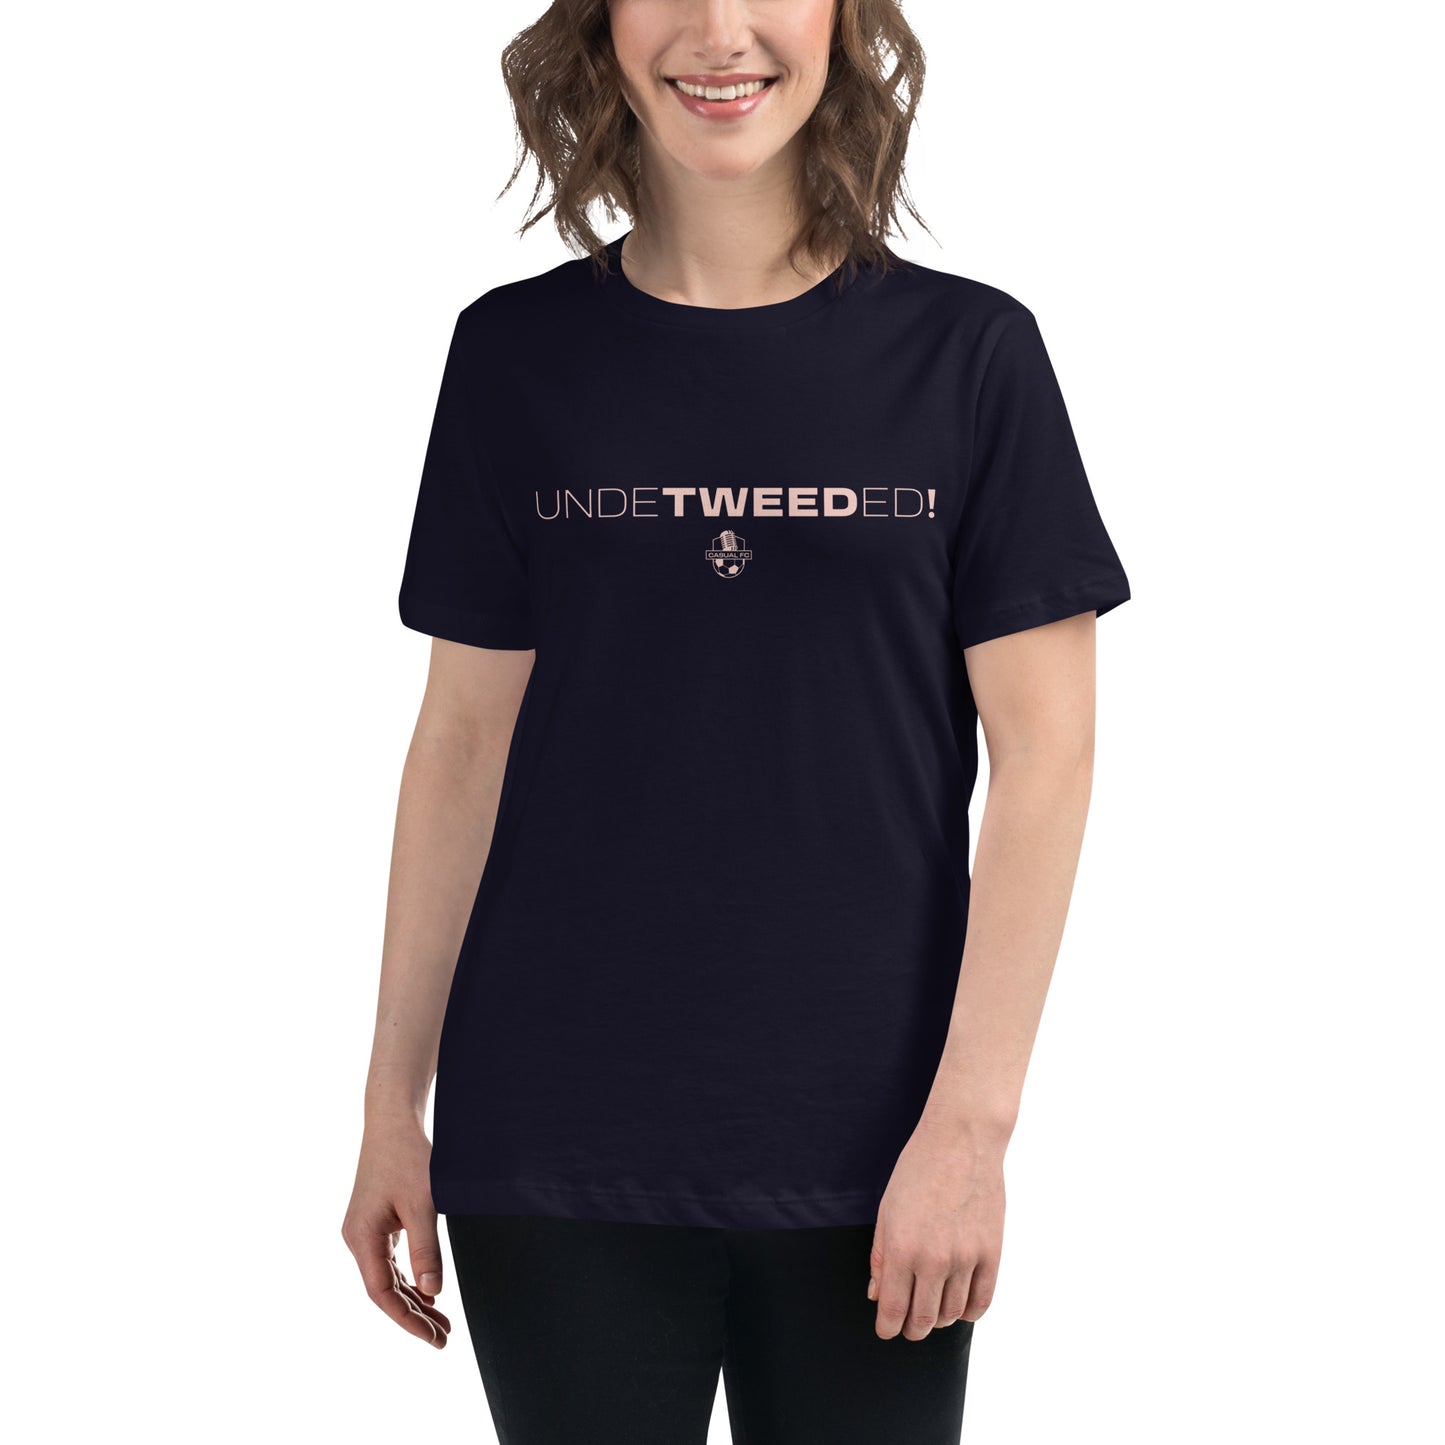 UndeTweeded! Women's Shirt